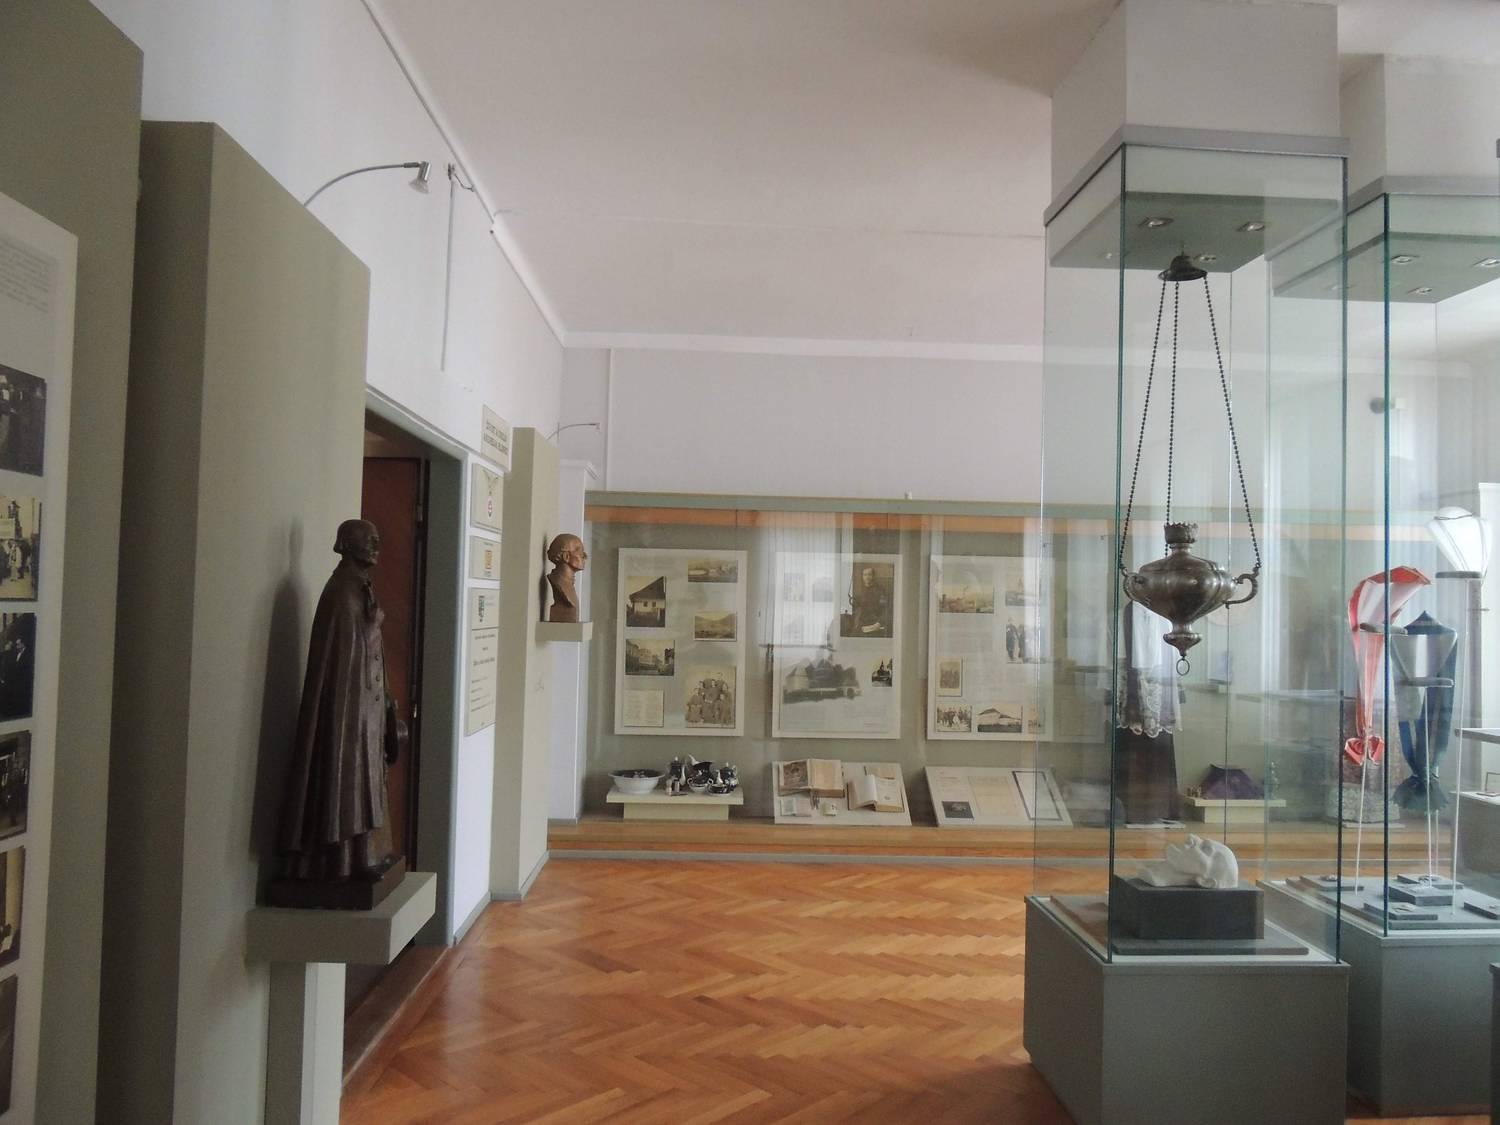 Liptovské múzeum v Ružomberku